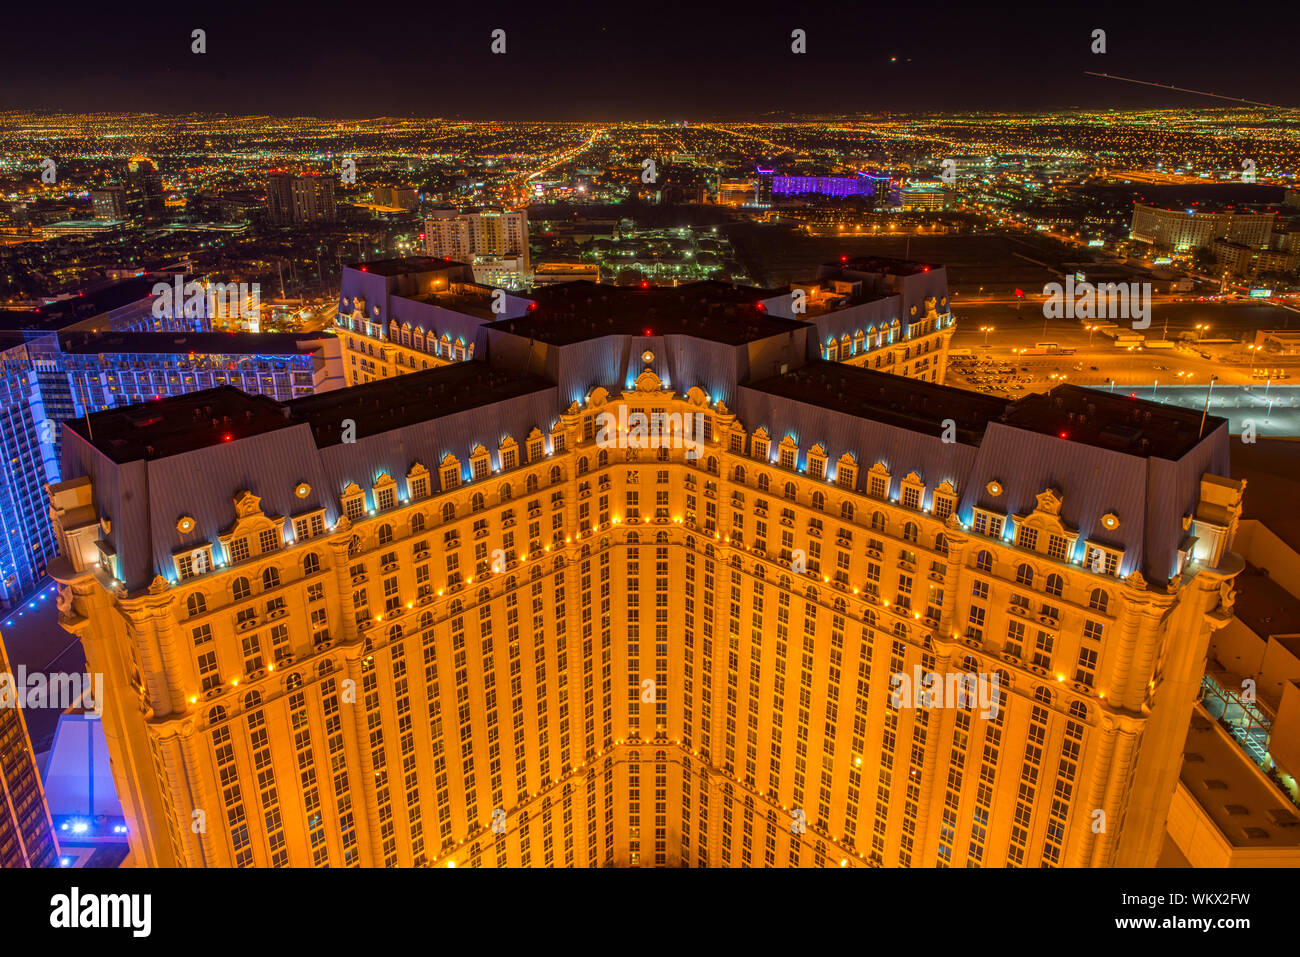 The Paris Hotel and Casino - Eiffel Tower - Night Scene - Las Vegas Stock  Photo - Alamy